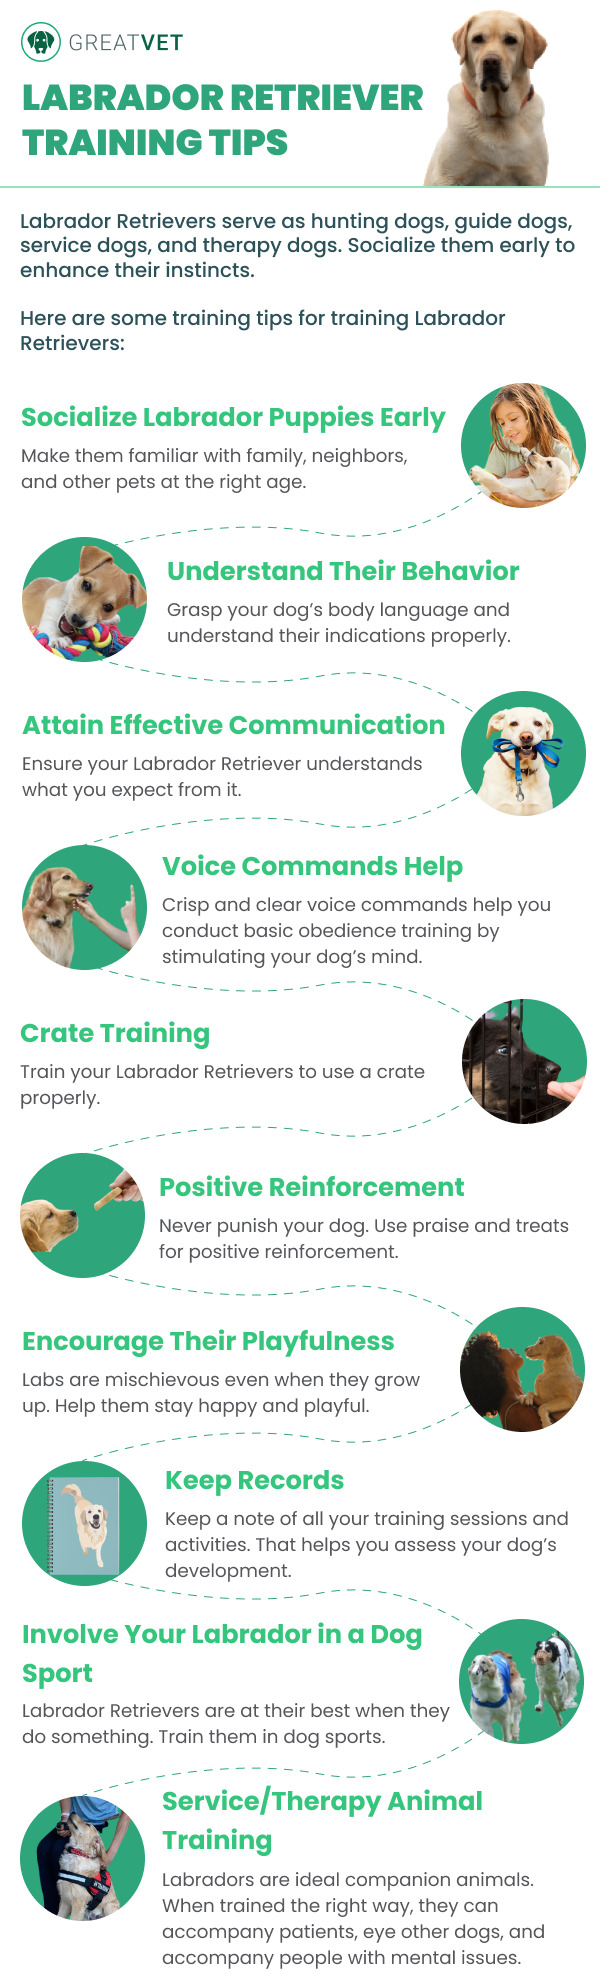 Training tips for dog